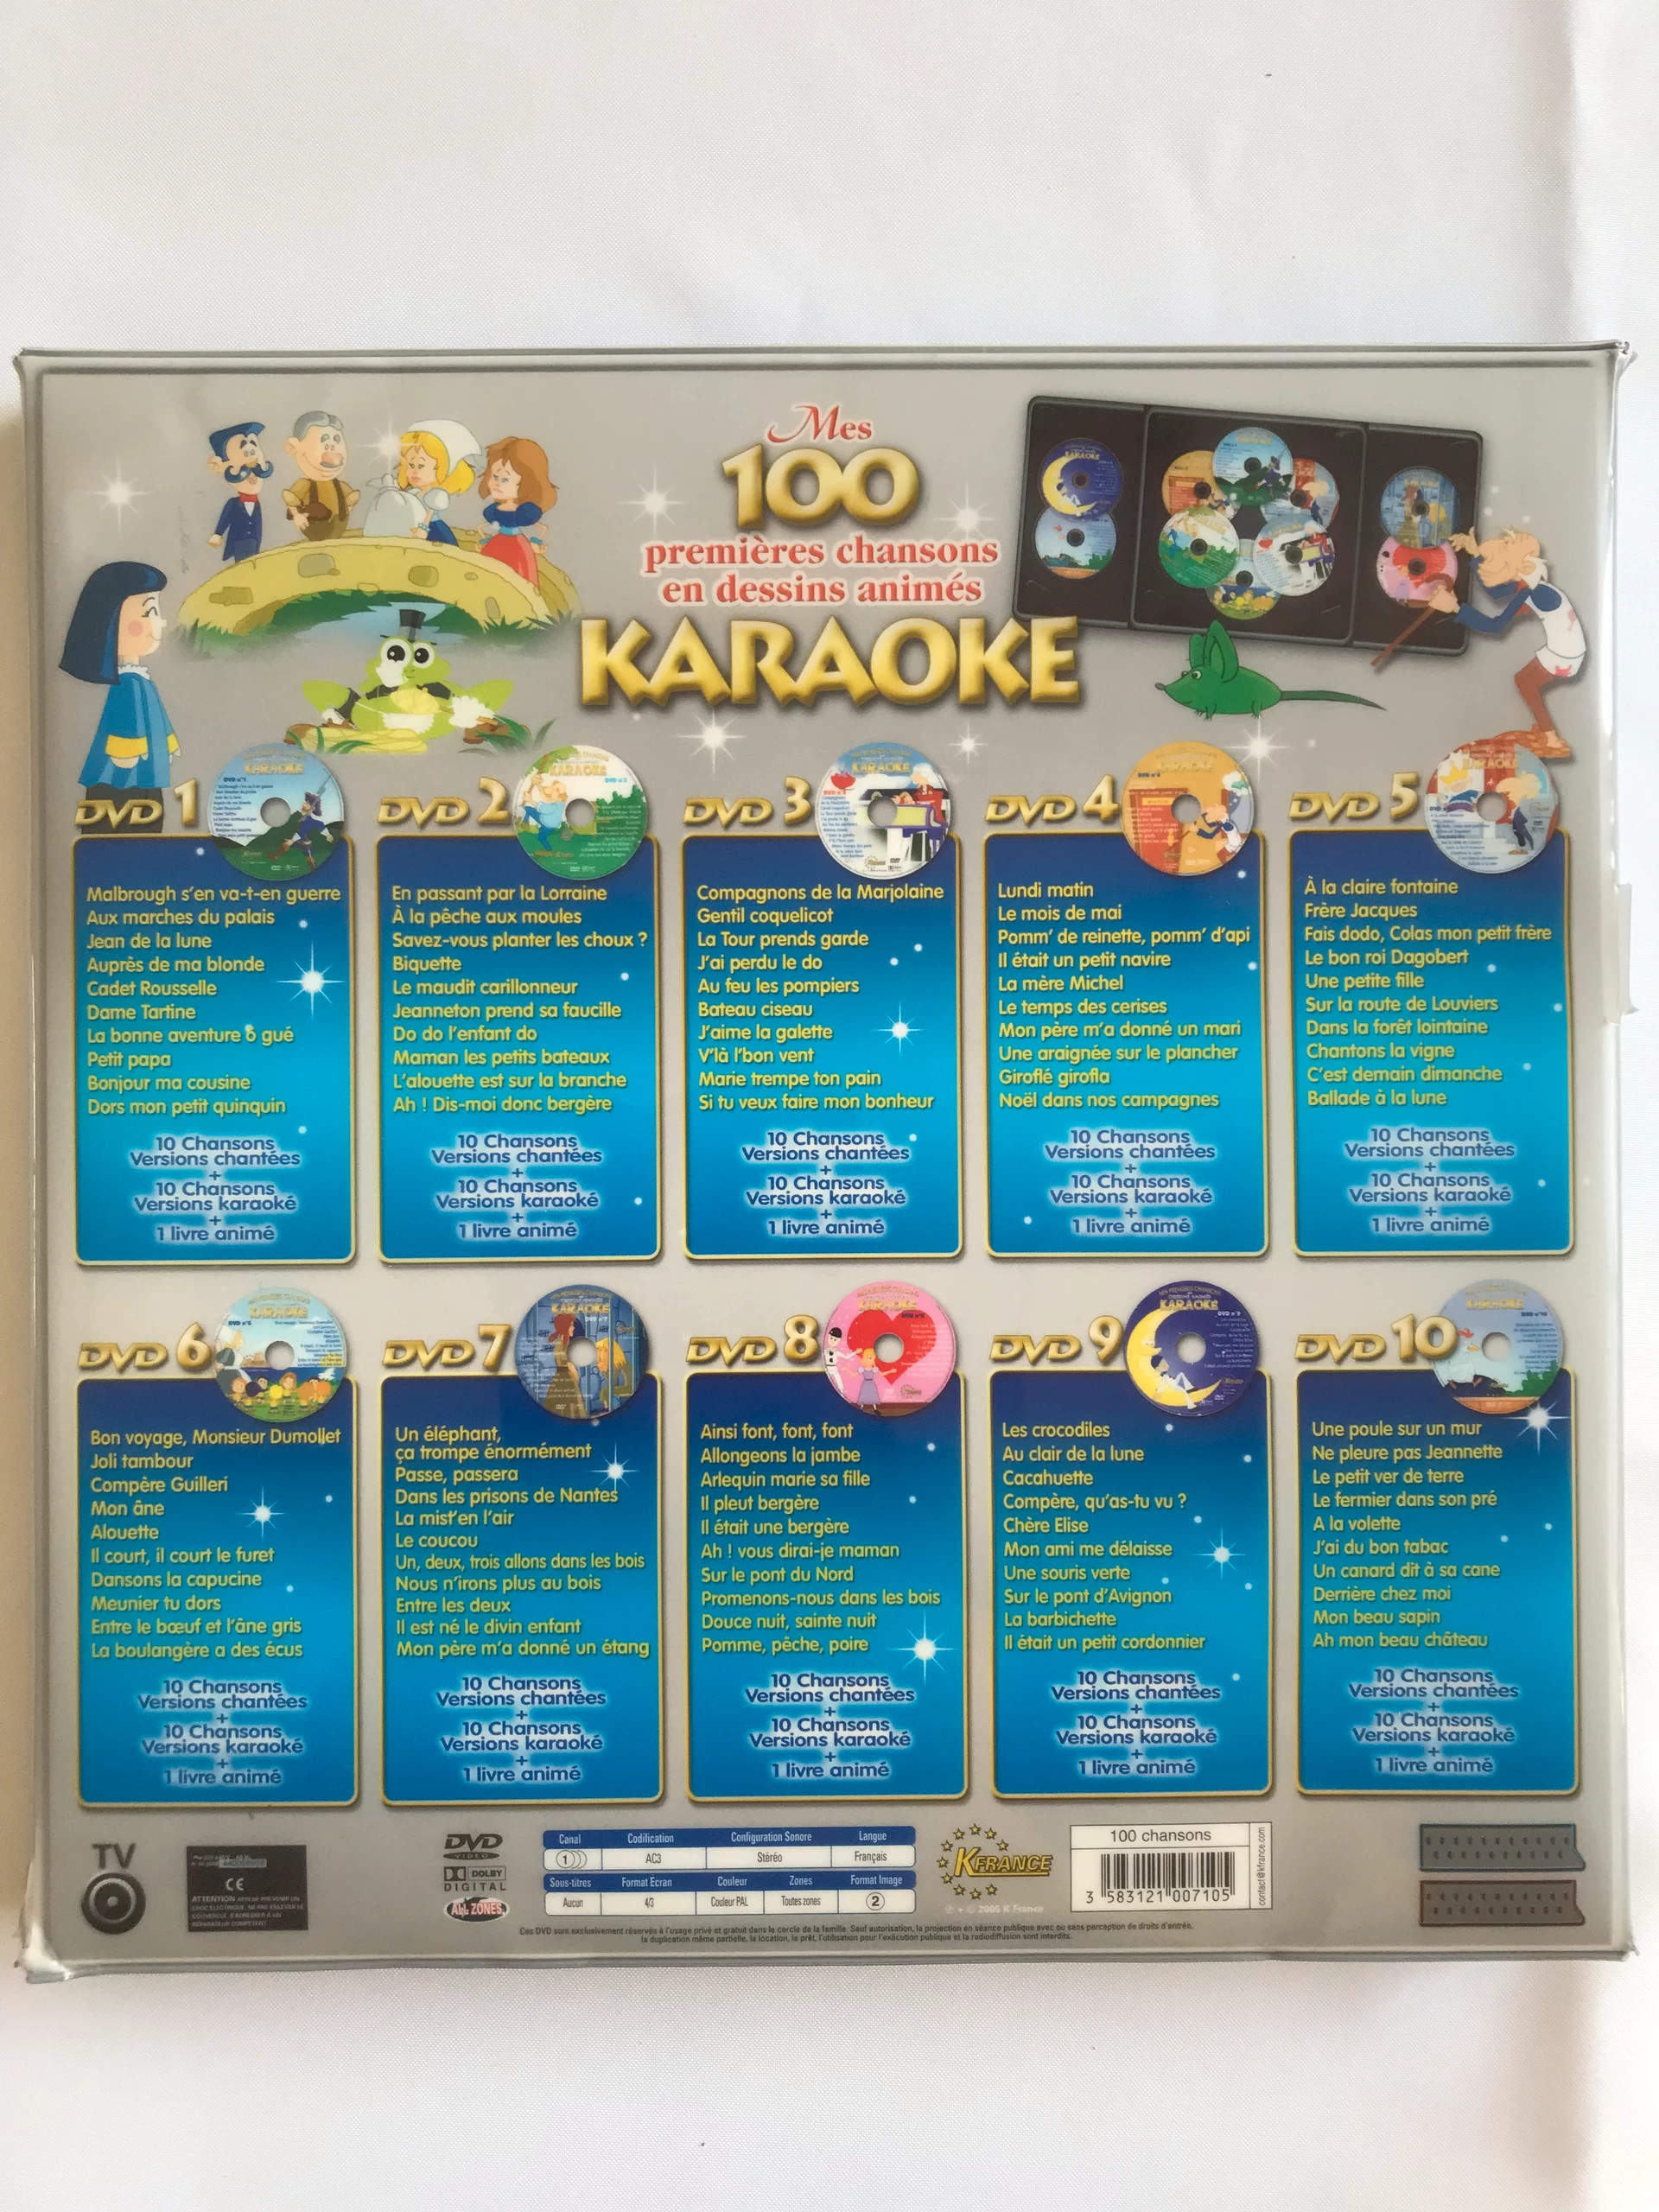 Karaoké gratuit - Chansons en version karaoké (karaoke party)